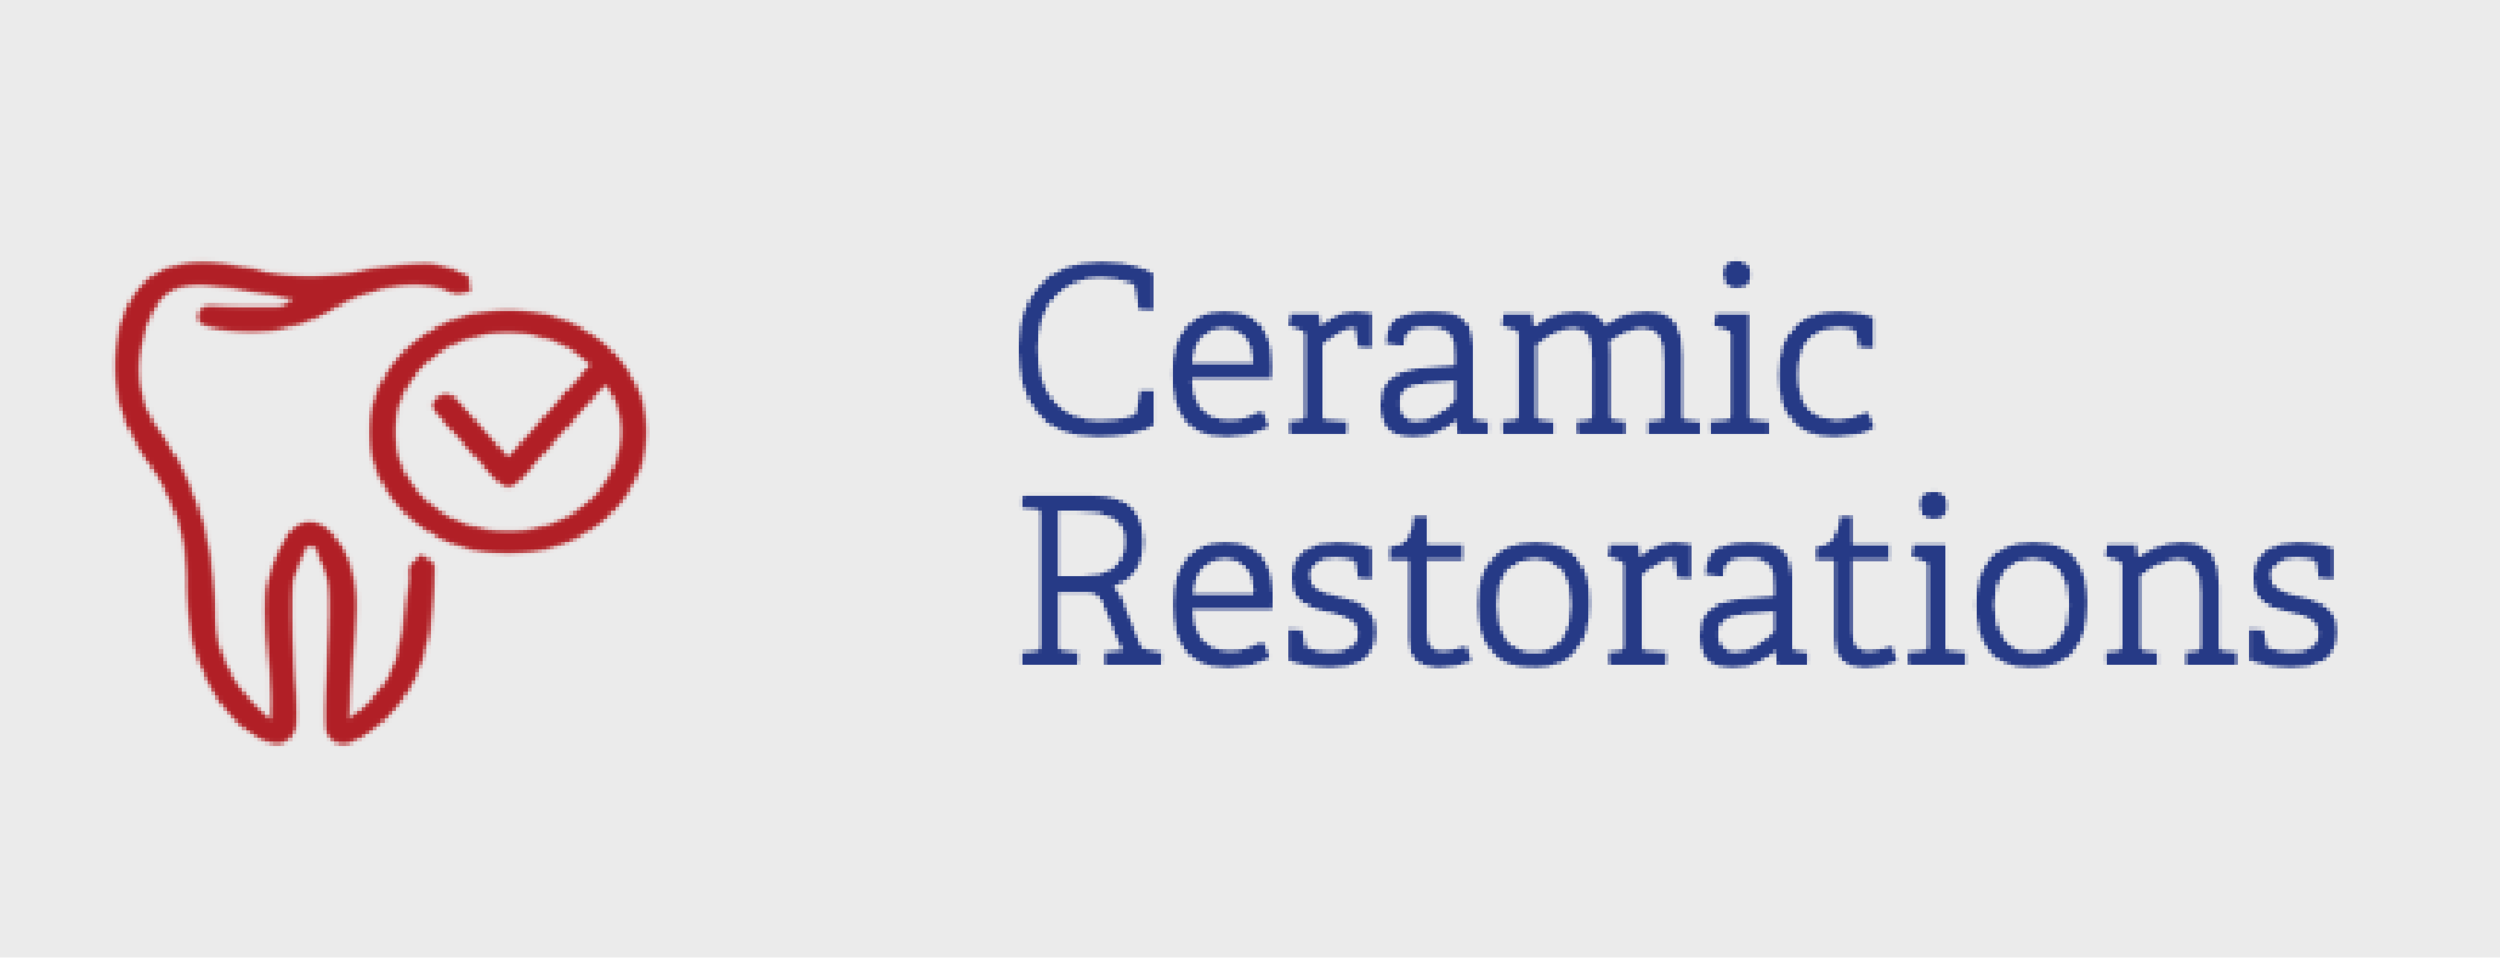 SERVICES_ceramic restorations.png